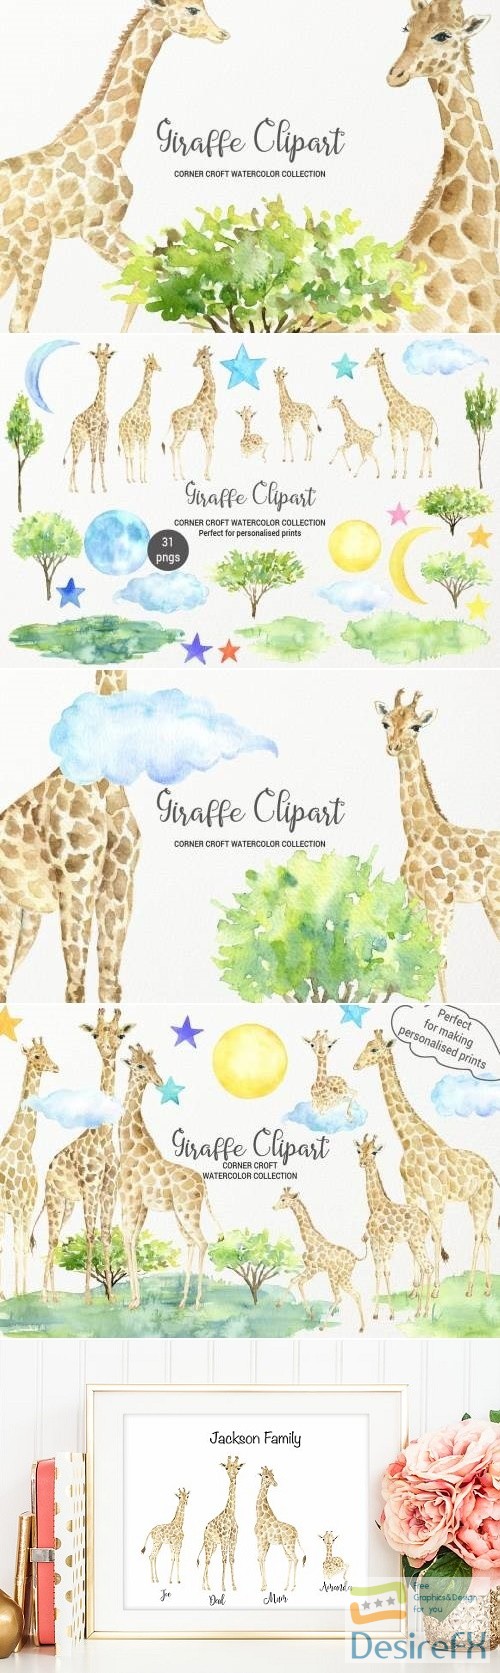 Giraffe clipart, giraffe family - 2665955